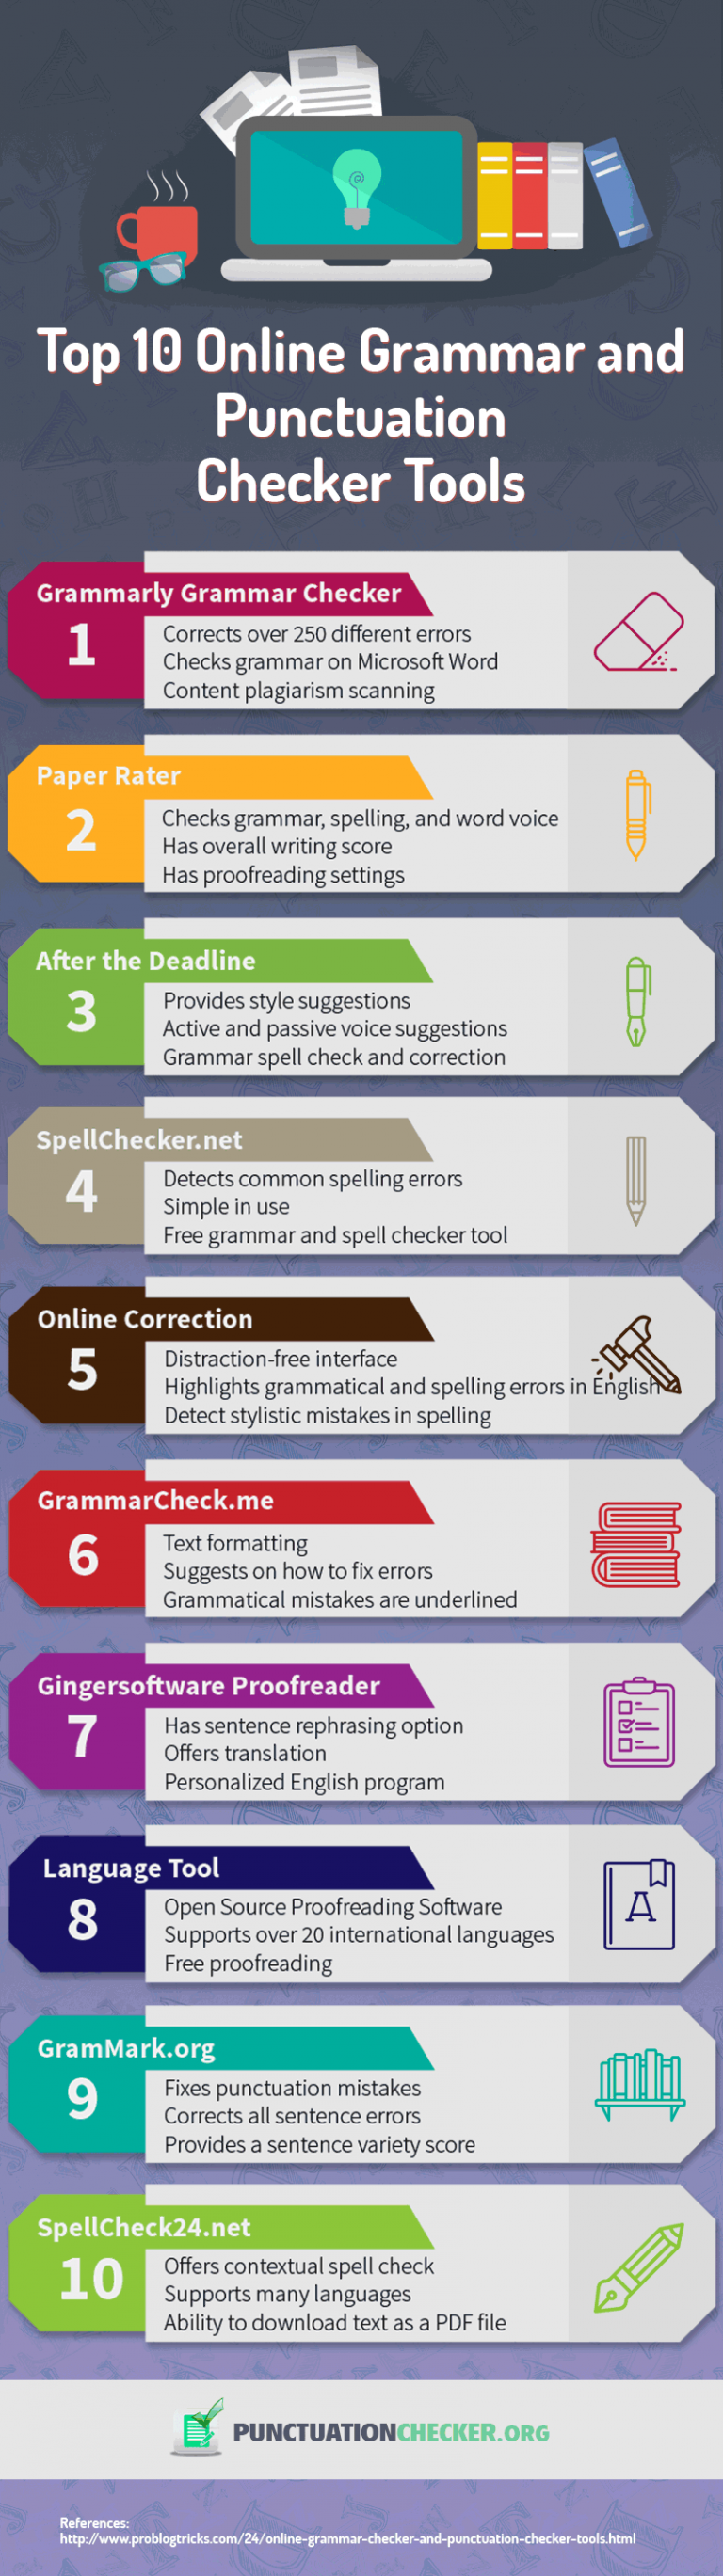 10-best-online-grammar-checkers-tools-punctuation-checker